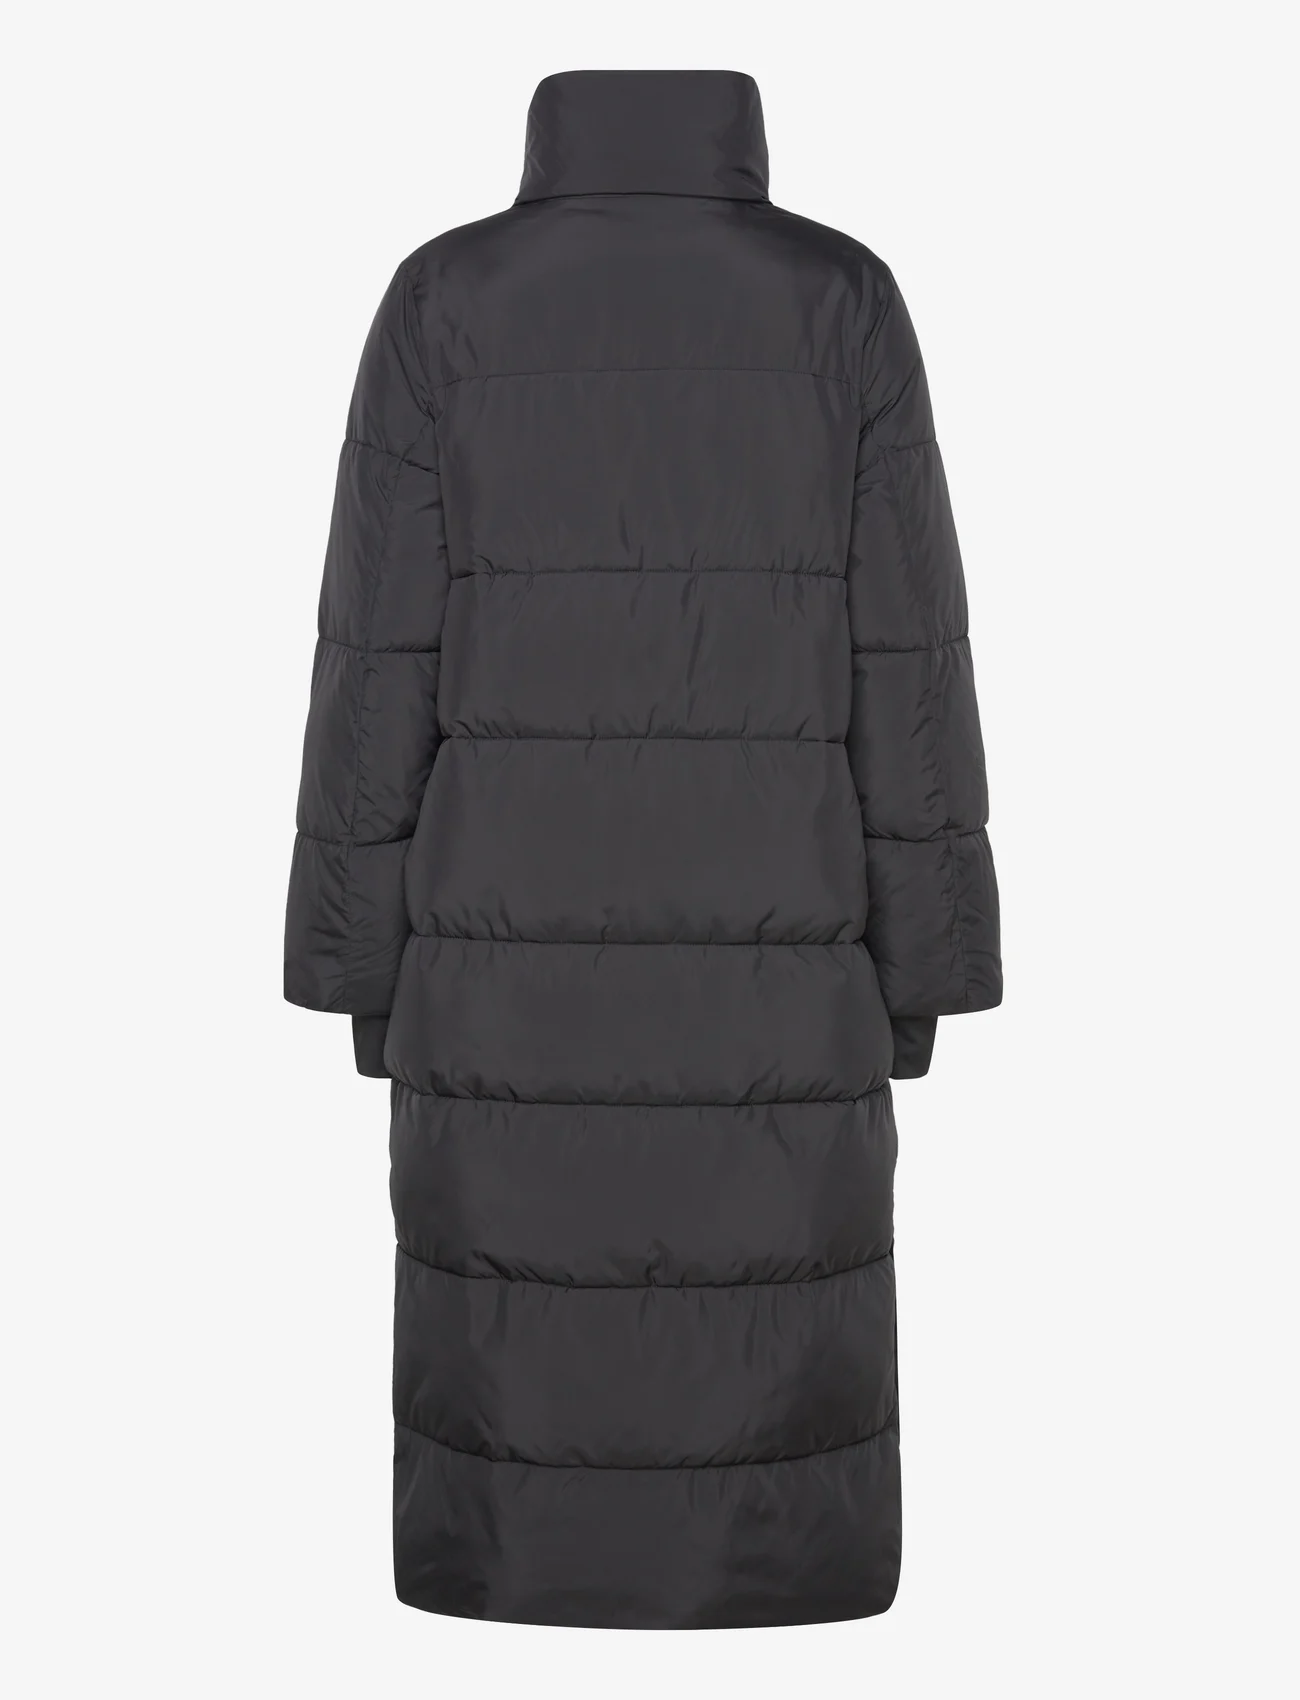 Röhnisch - Reign Coat - padded coats - black - 1